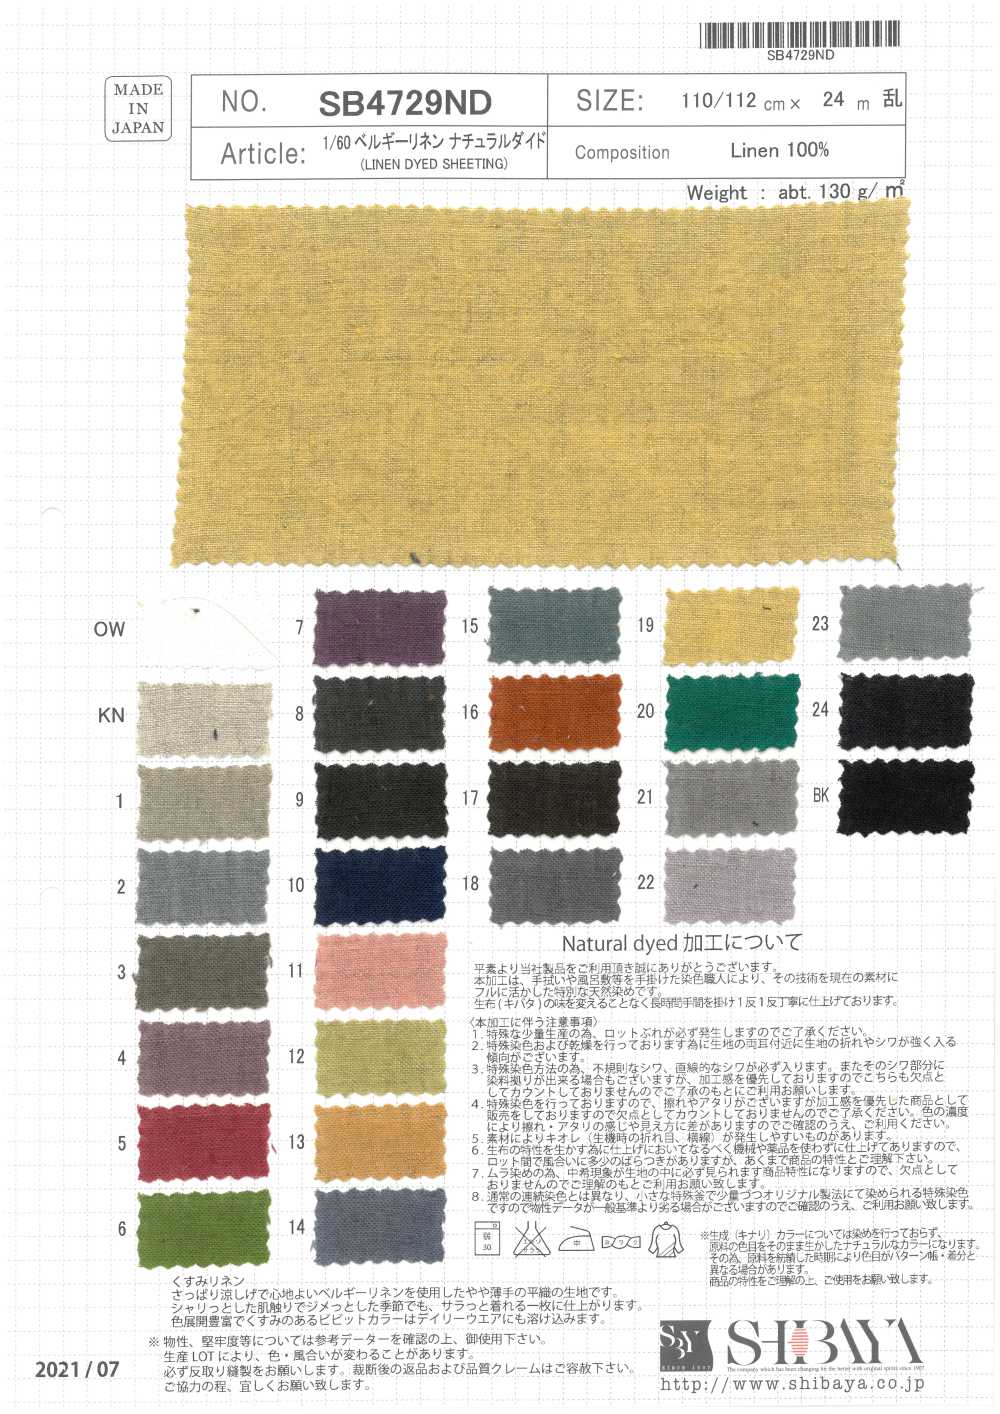 SB4729ND 1/60 Belgian Linen Canvas Natural Dyed[Textile / Fabric] SHIBAYA